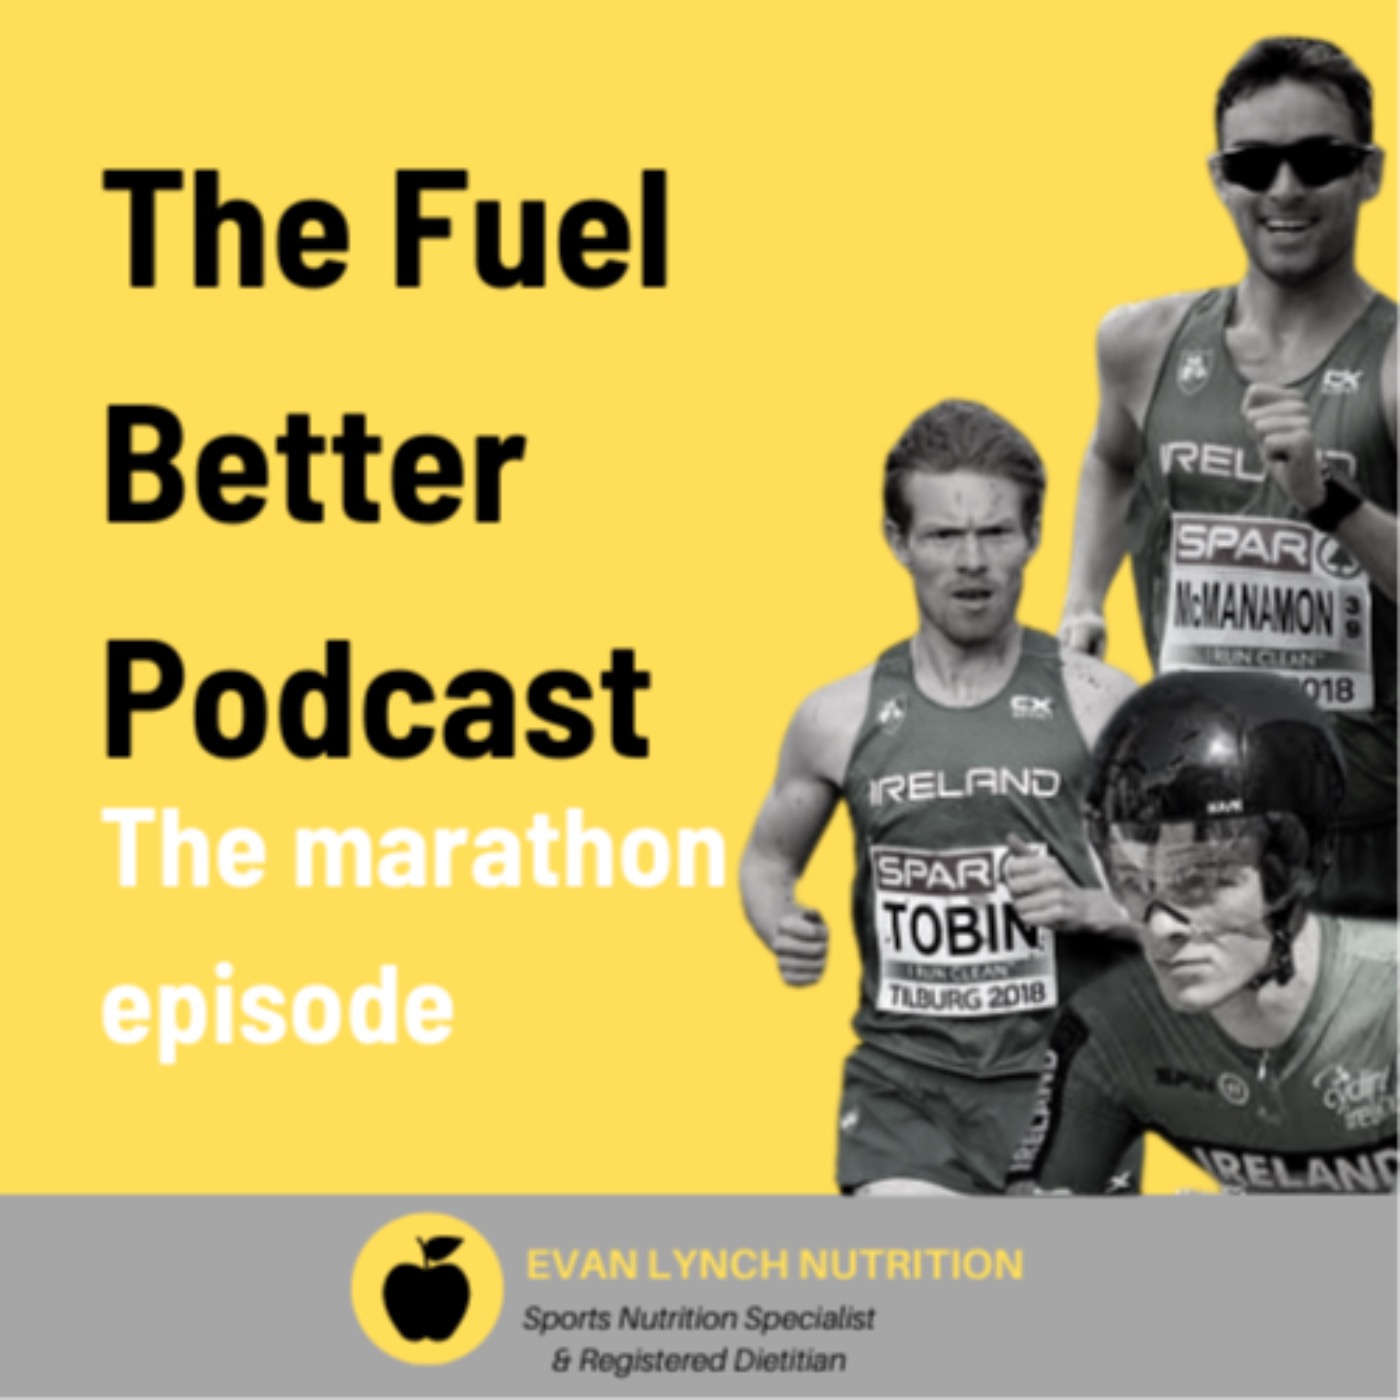 Marathon nutrition considerations